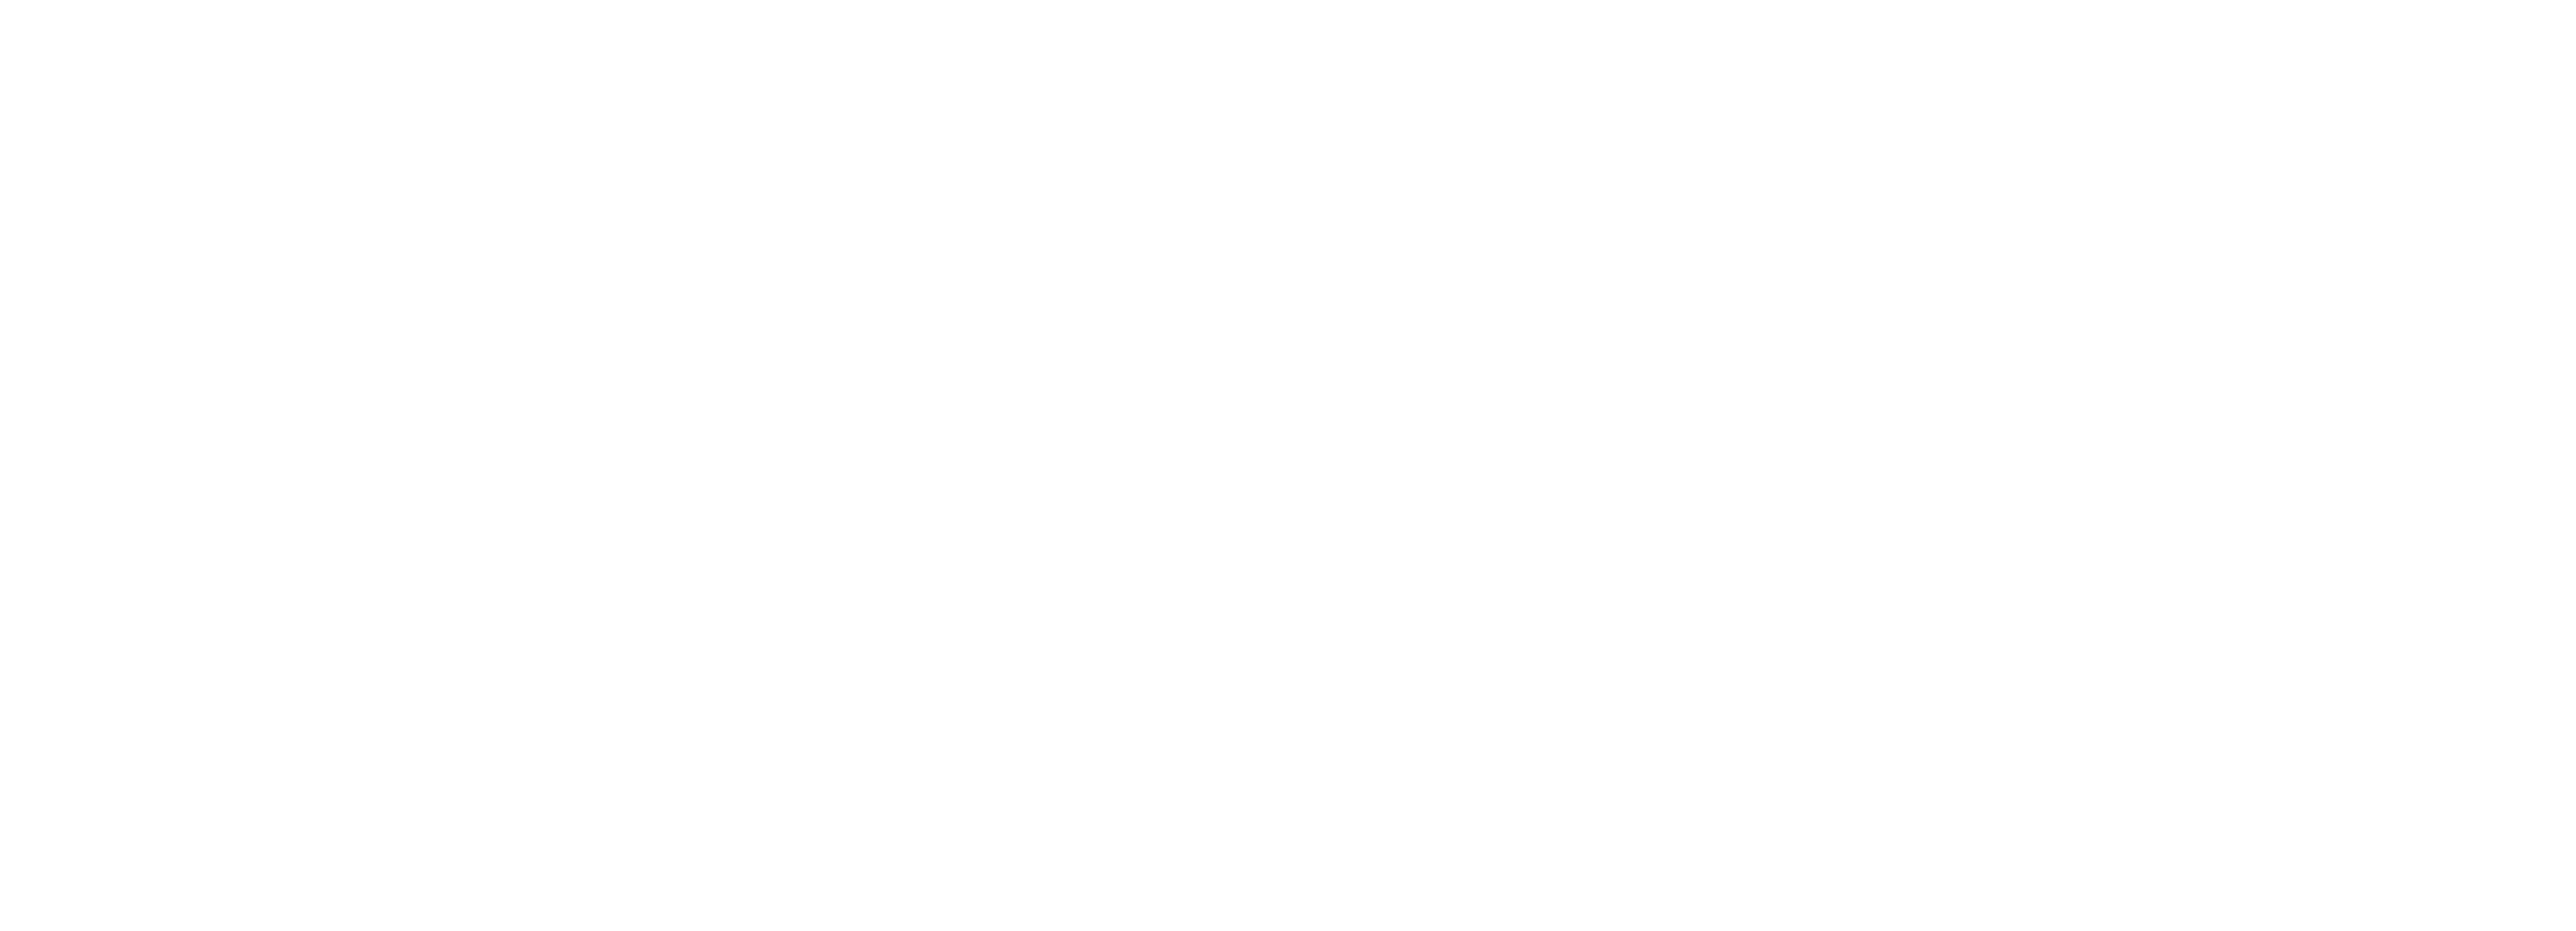 Independent Space Index 2022